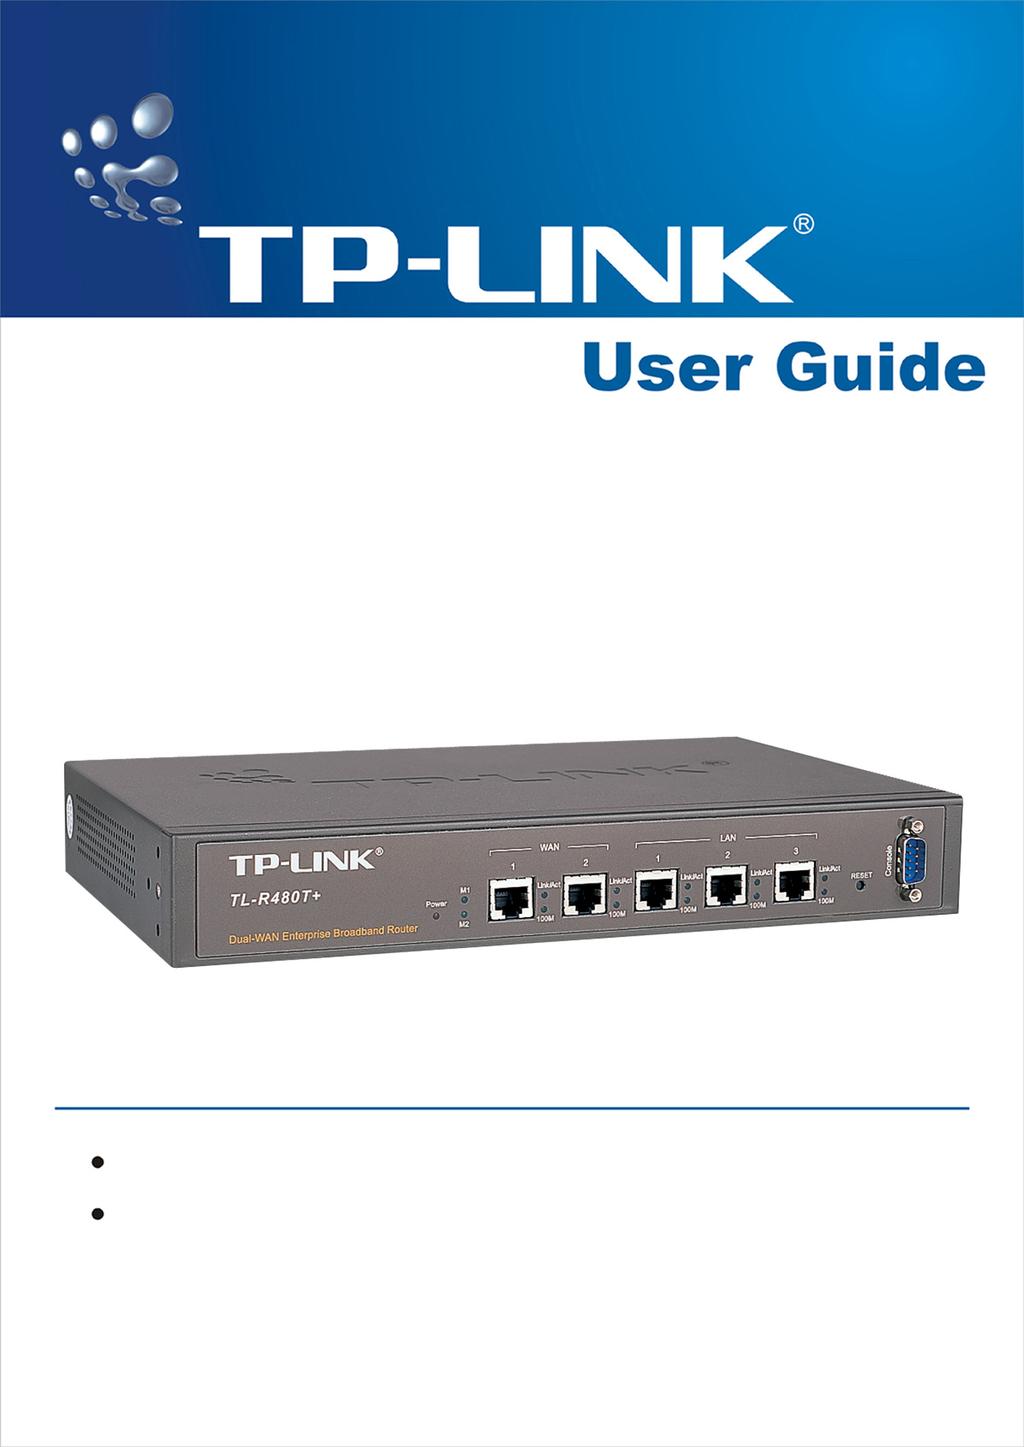 TL-R480T+ Load Balance Broadband Router Intel IXP Core, Main